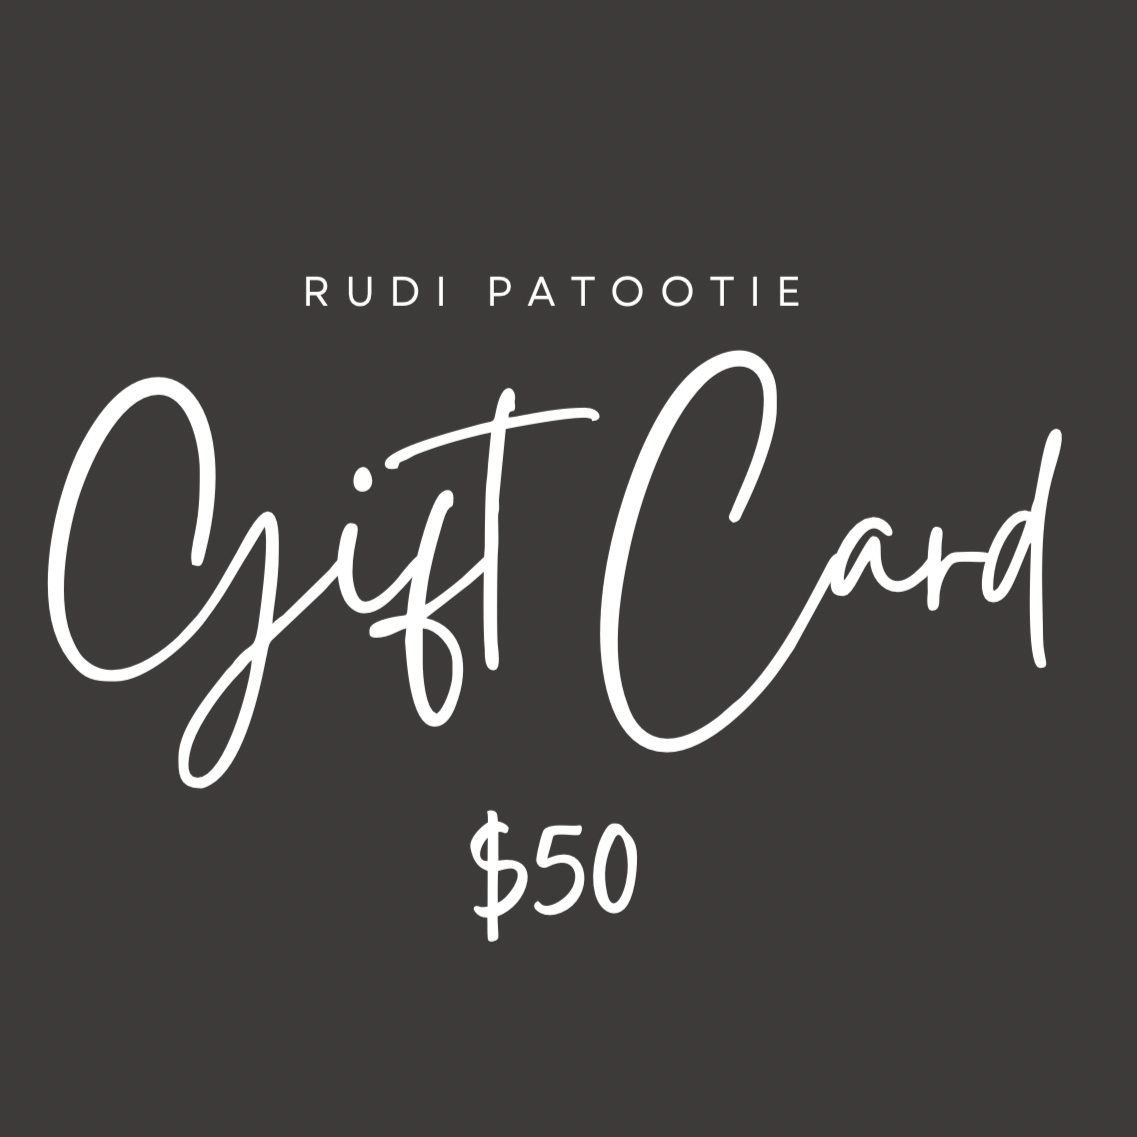 Rudi Patootie Gift Card/Voucher Merimbula NSW Australia 